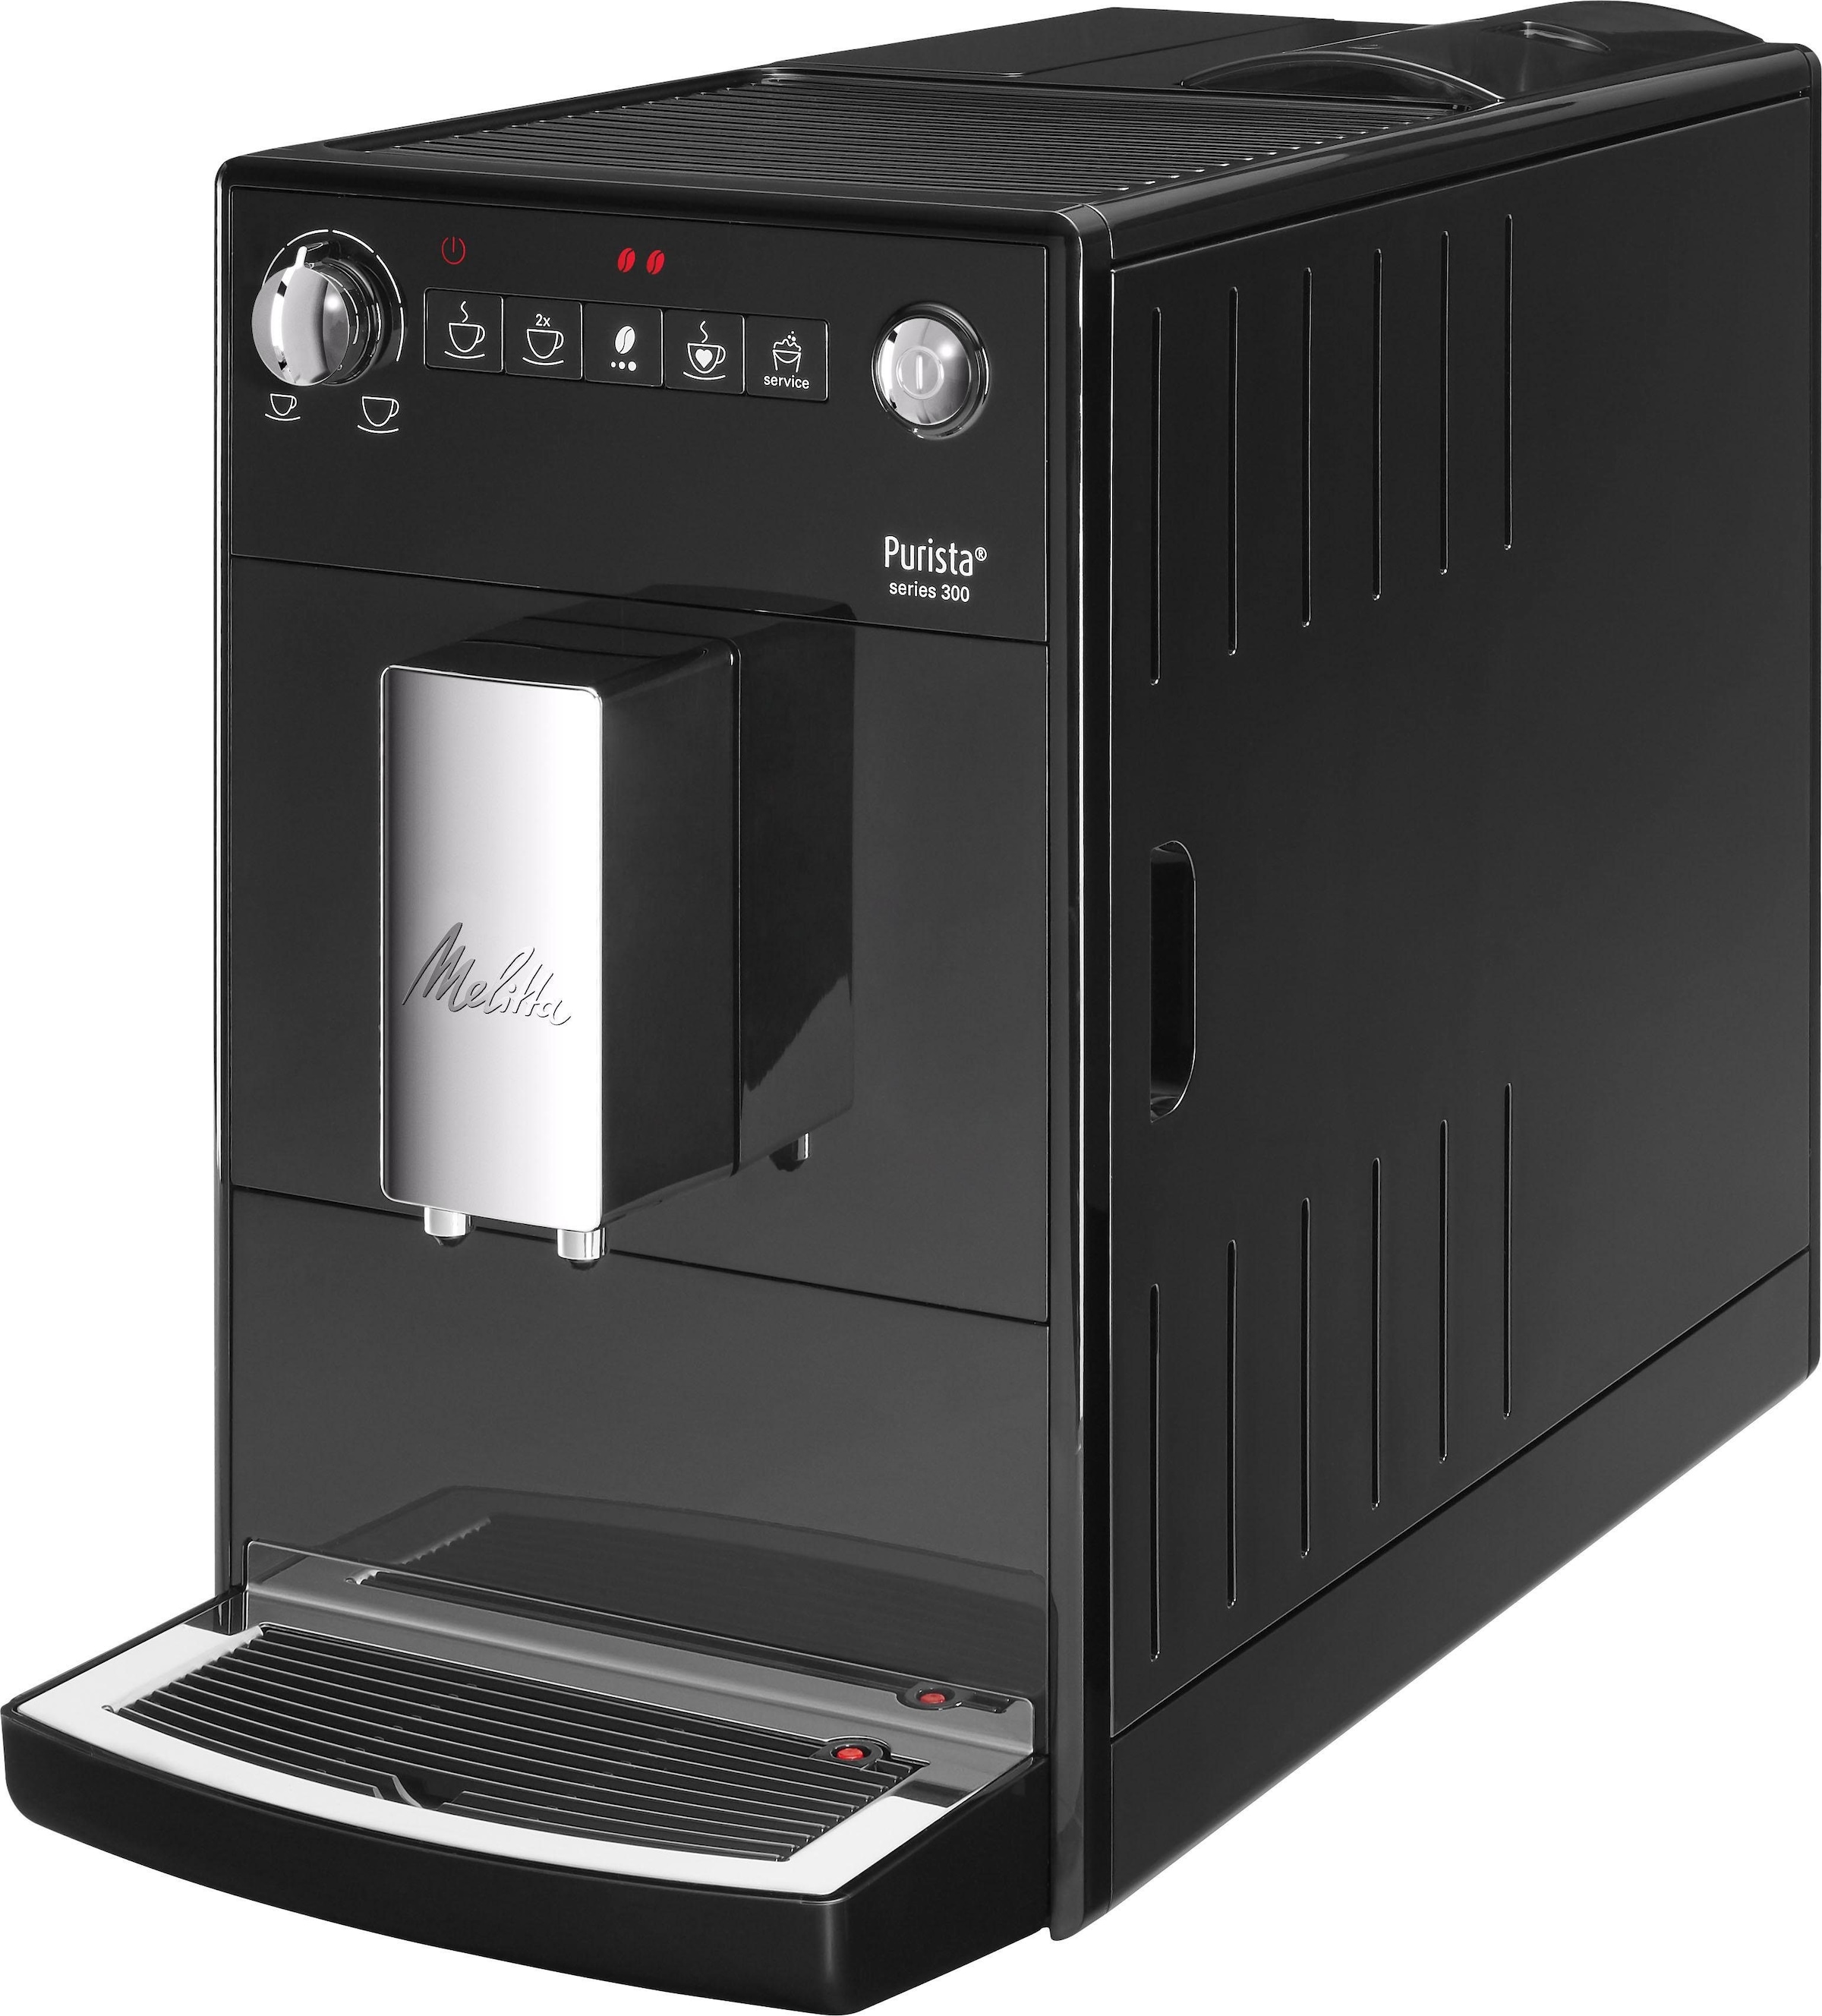  Melitta Purista - Kaffeevollautomat - flüsterleises Mahlwerk -  Direktwahltaste - 2-Tassen Funktion - 3-stufig einstellbare Kaffeestärke -  Silber/Schwarz (F230-101)